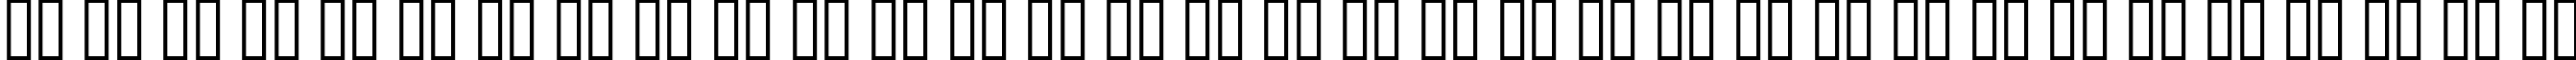 Пример написания русского алфавита шрифтом Blown Away